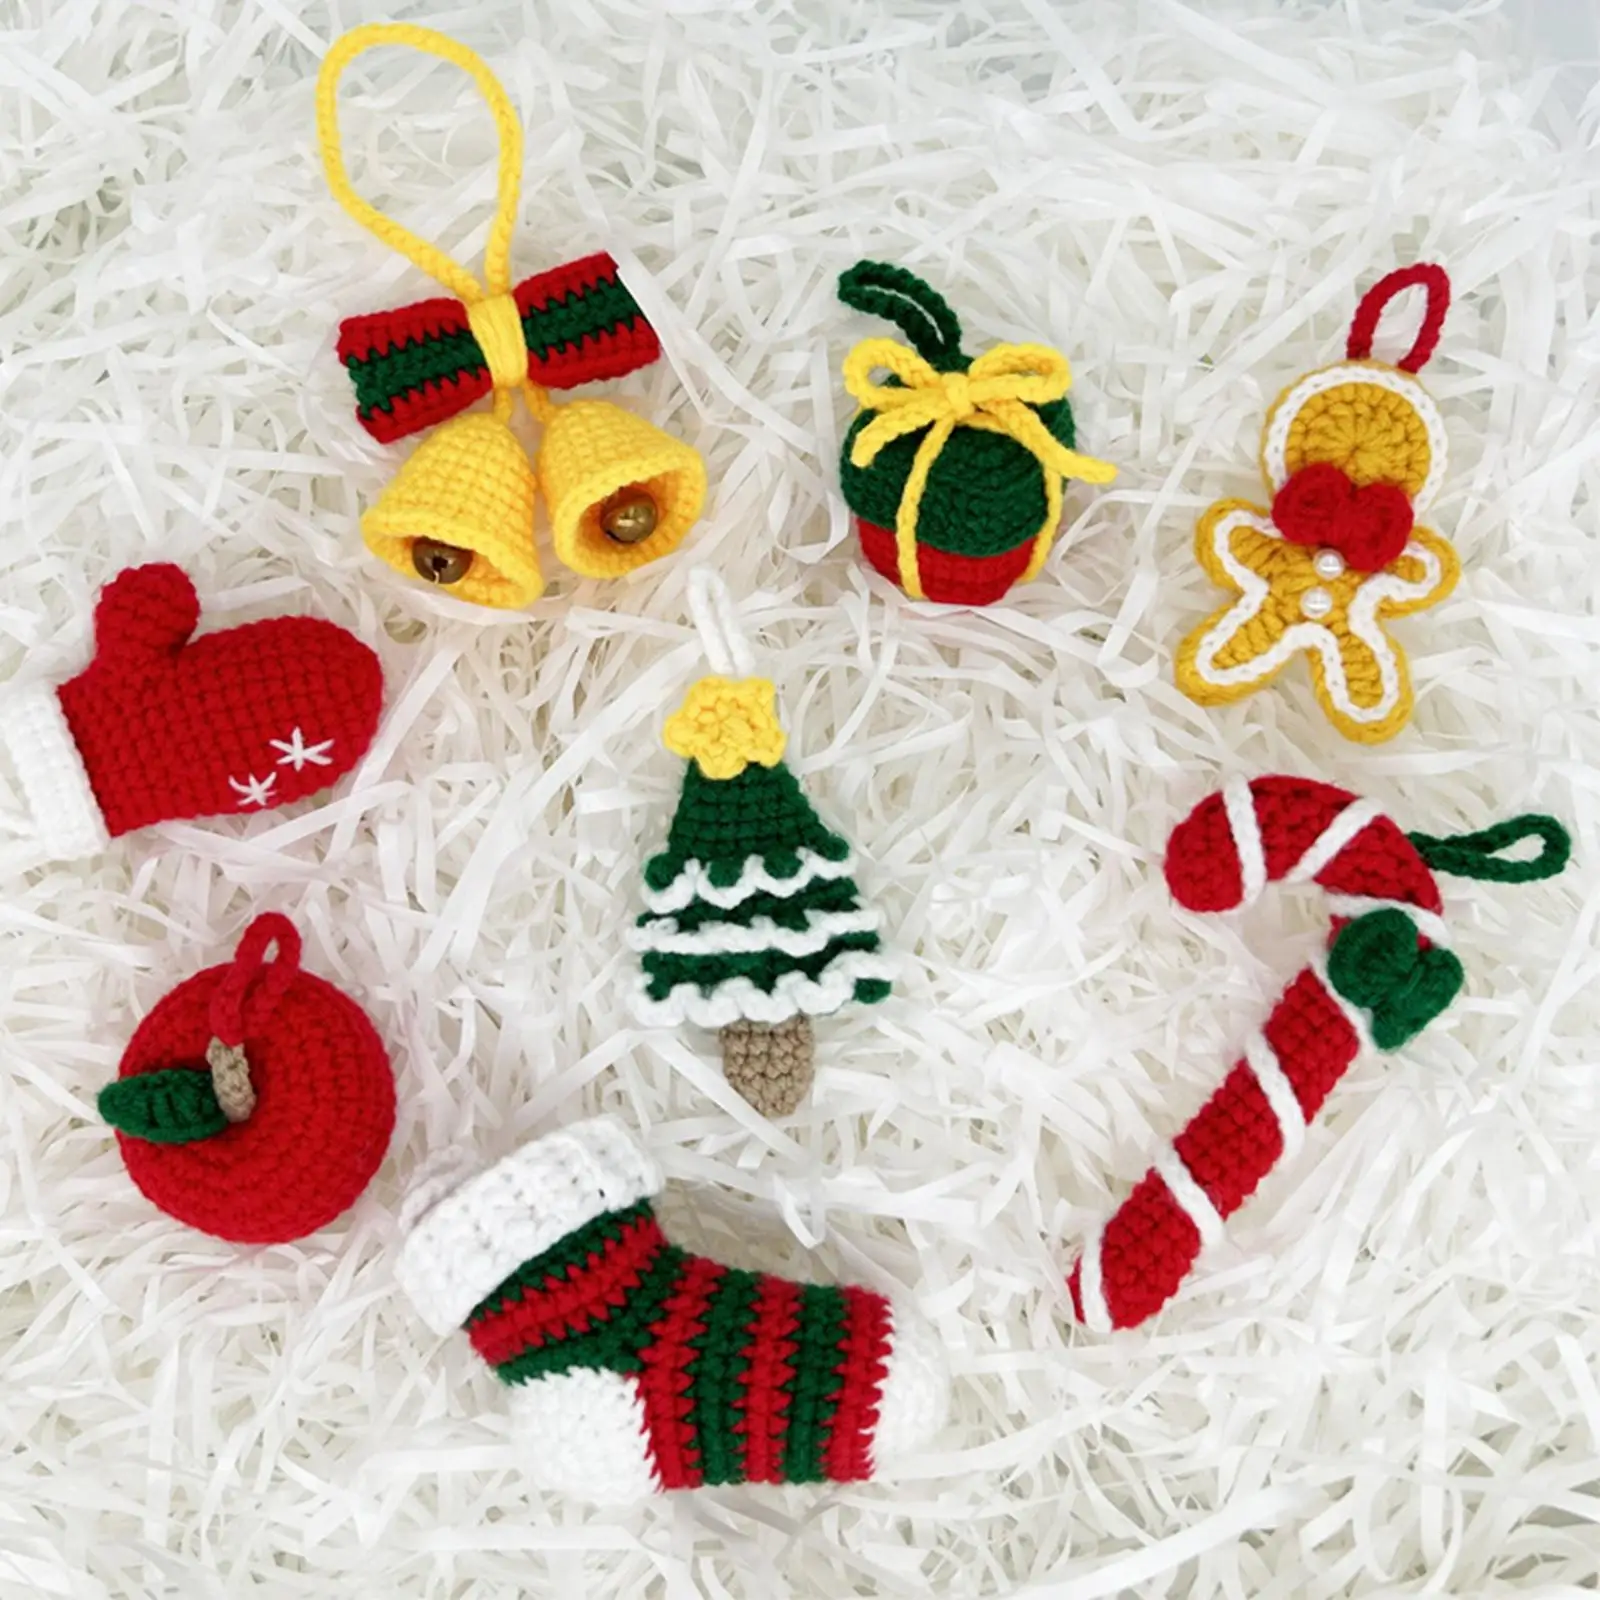 8x Christmas Crochet Kit for Beginner Adult Kids Home Decor Ornament Accessories Knitted Crochet Craft Set for Thanksgiving